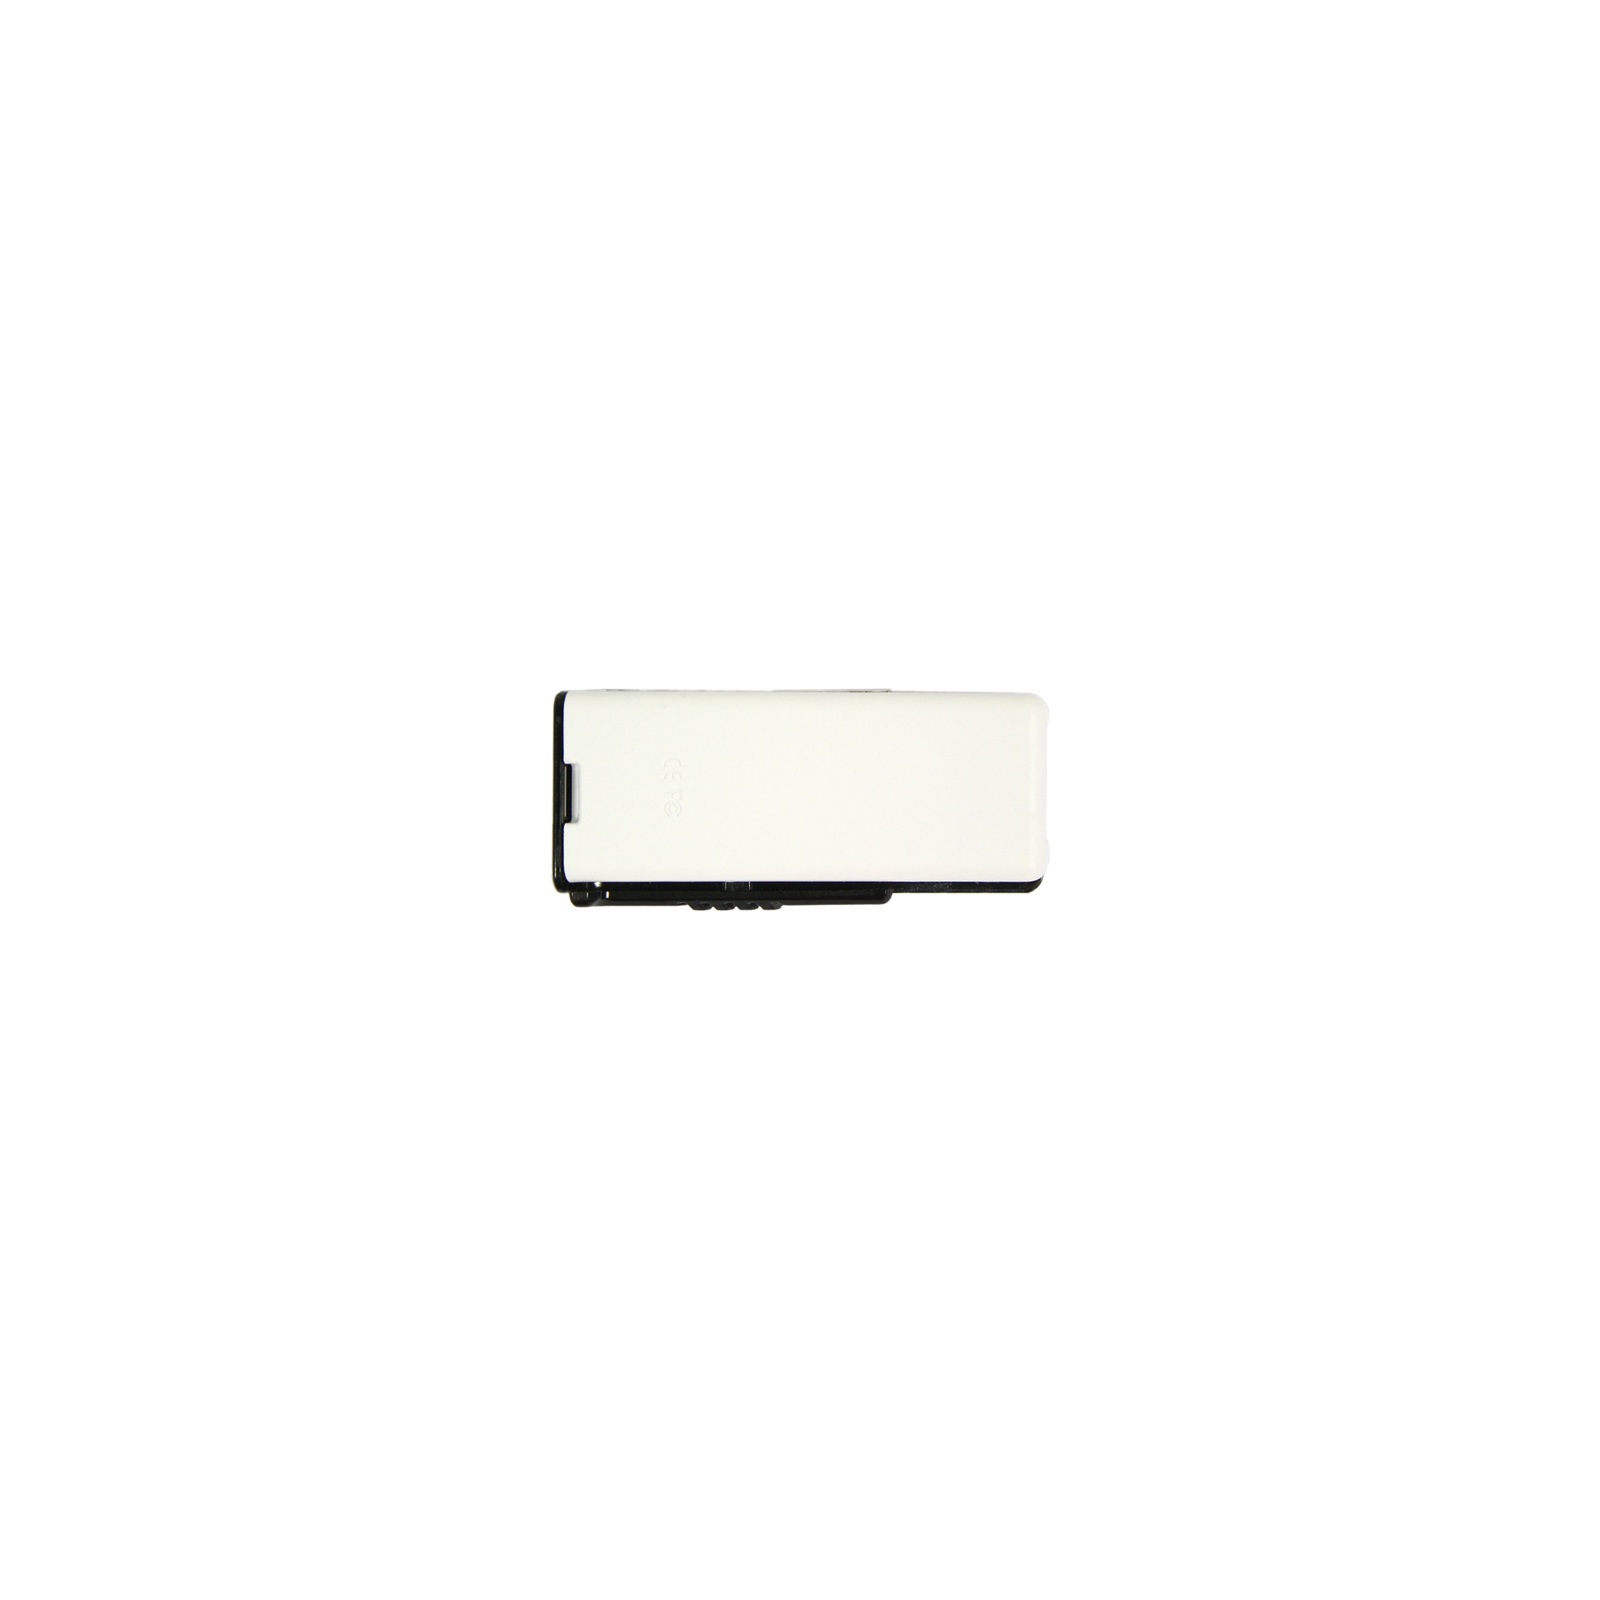 USB флеш накопитель Apacer 32GB AH350 Black RP USB3.0 (AP32GAH350B-1) изображение 2